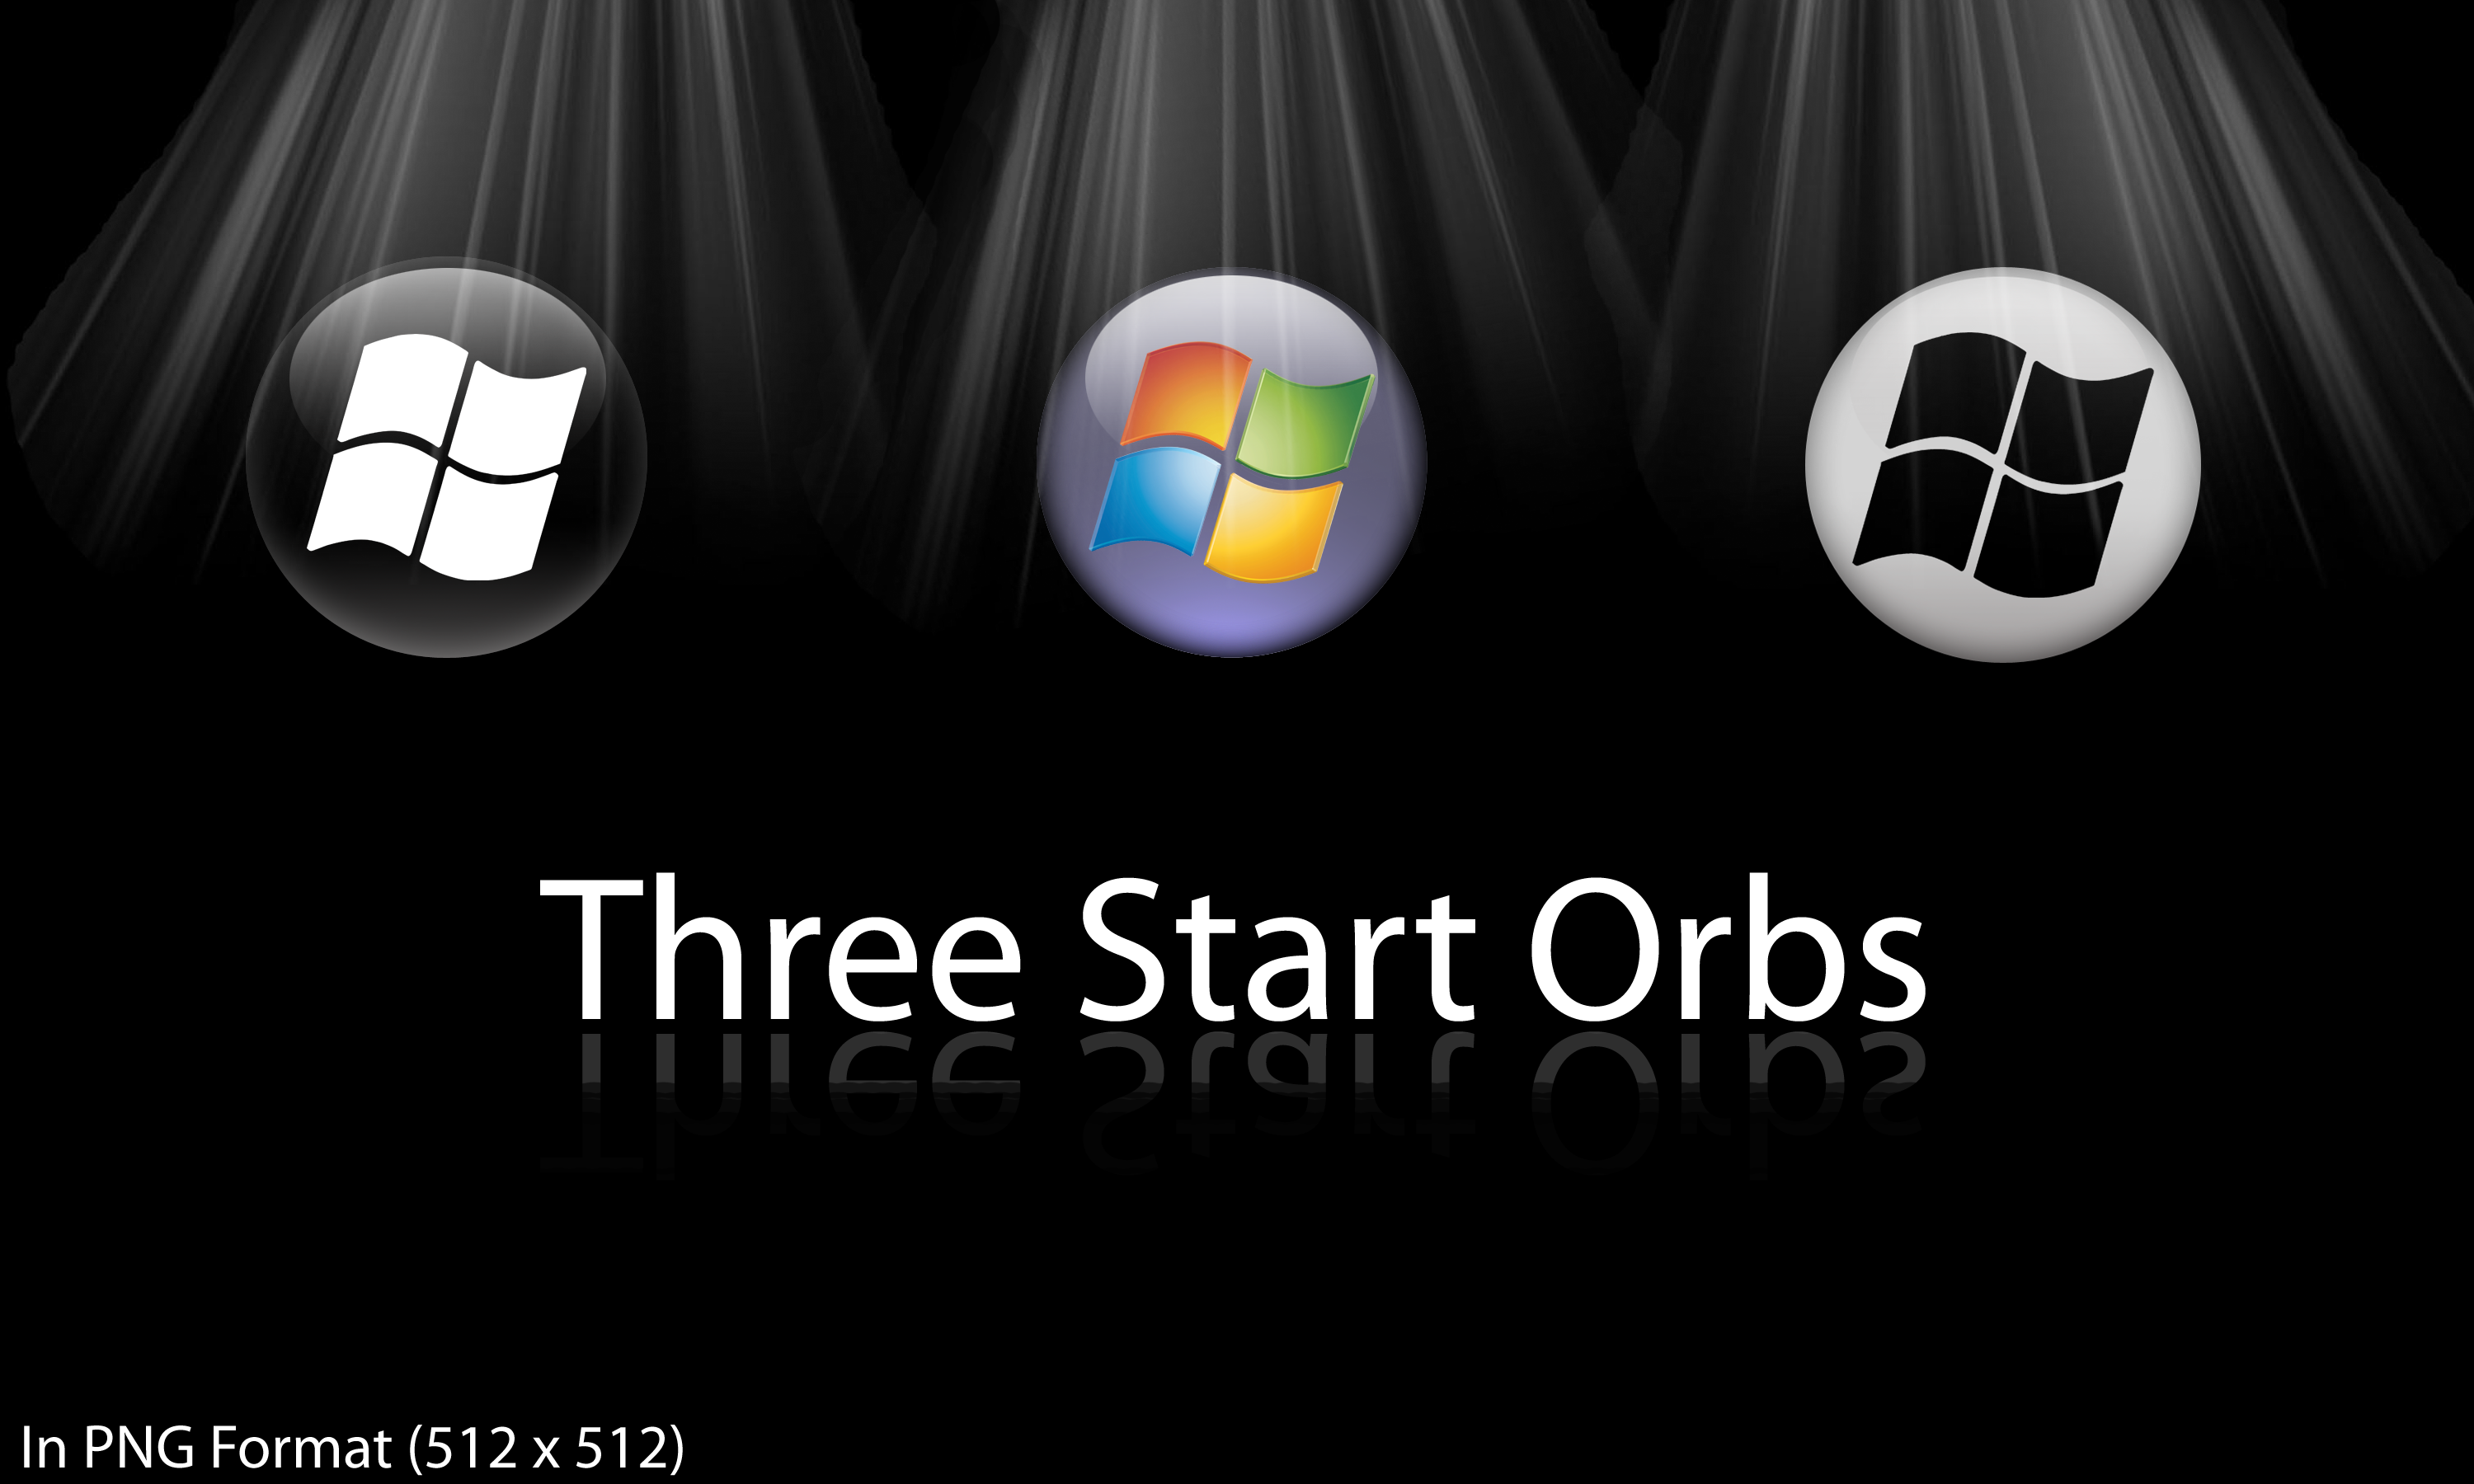 Custom Windows 7 Start Orb